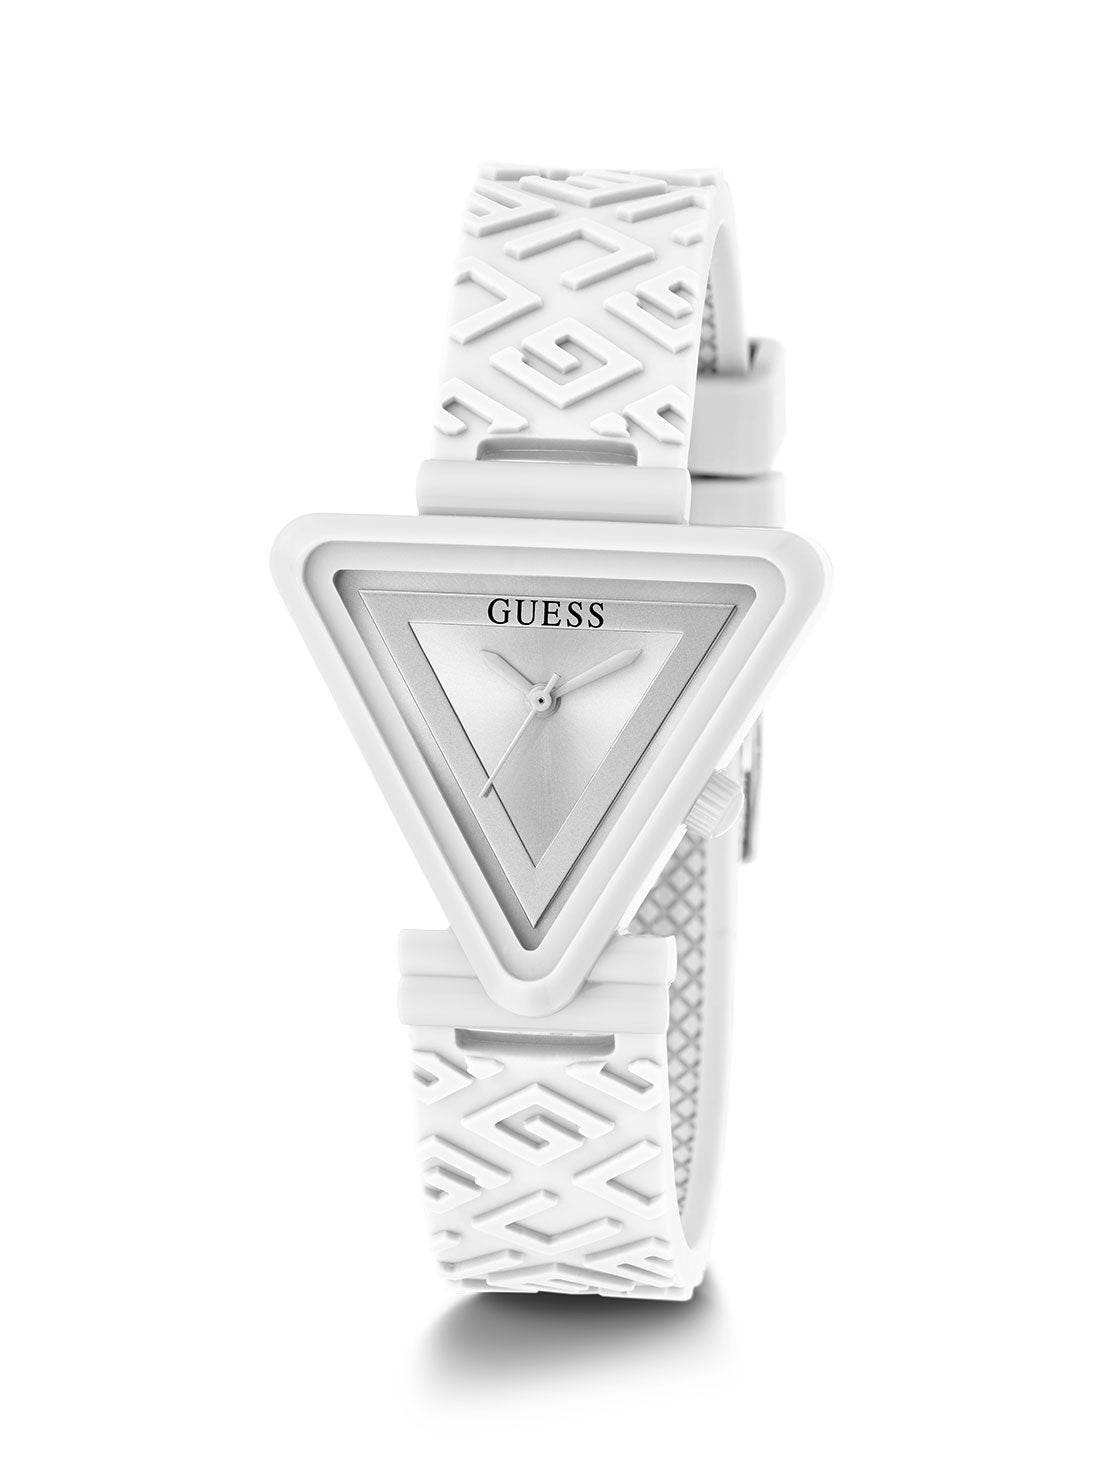 GUESS Women's White Fame Logo Silicone Watch GW0543L1 Full View